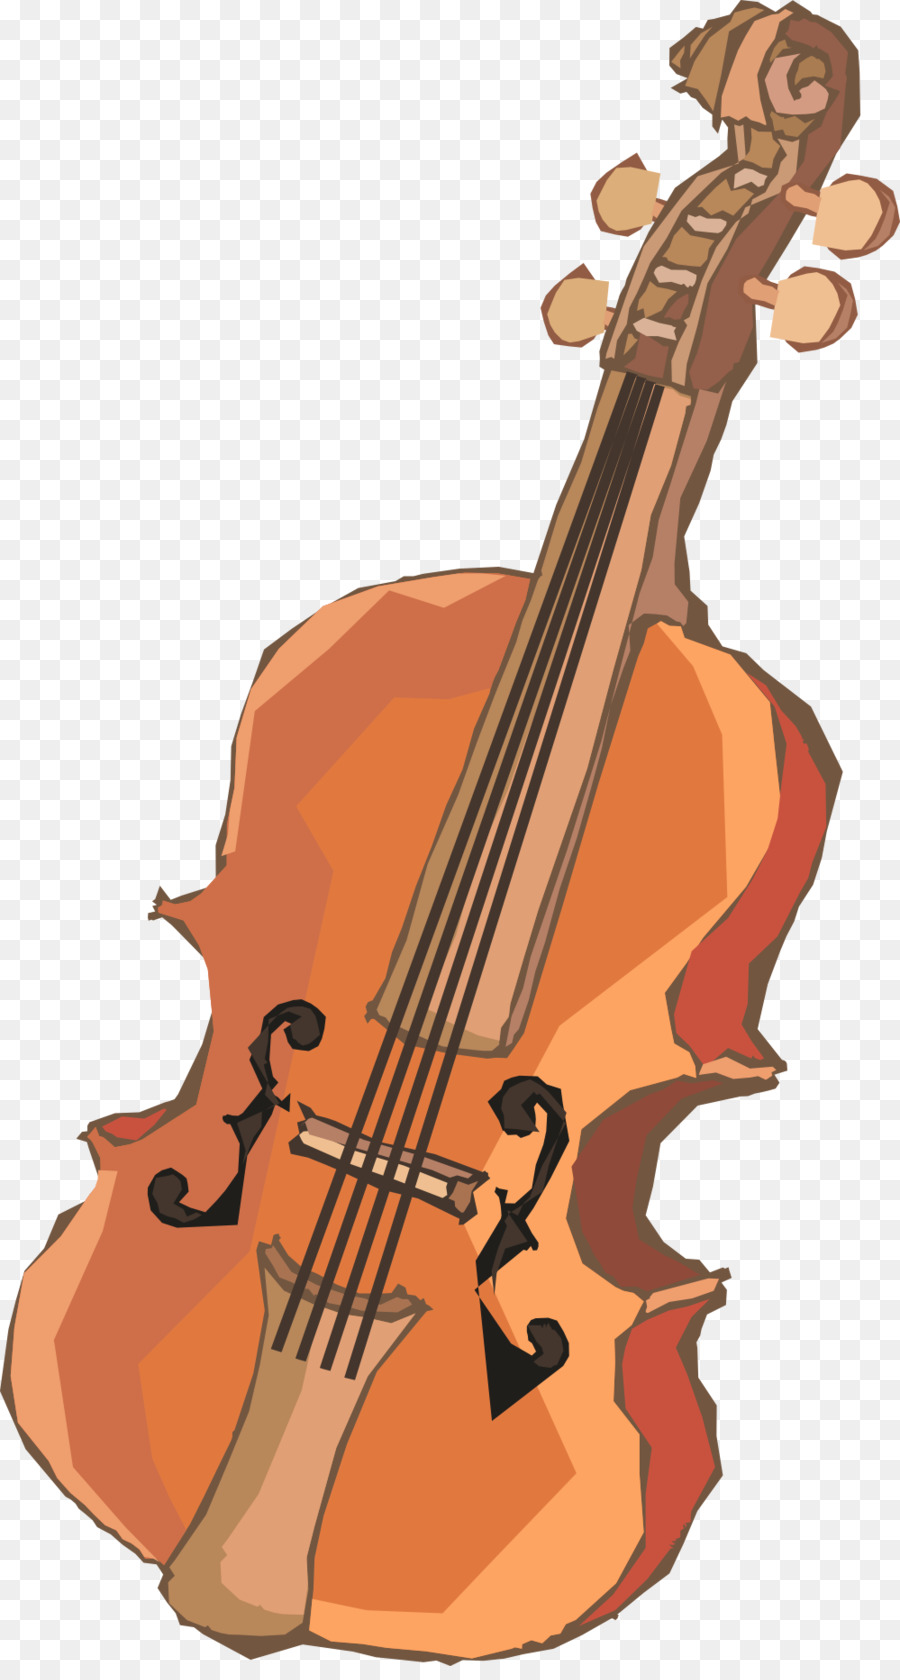 Violin Cello Clip art - violin png download - 999*1849 - Free Transparent  png Download.